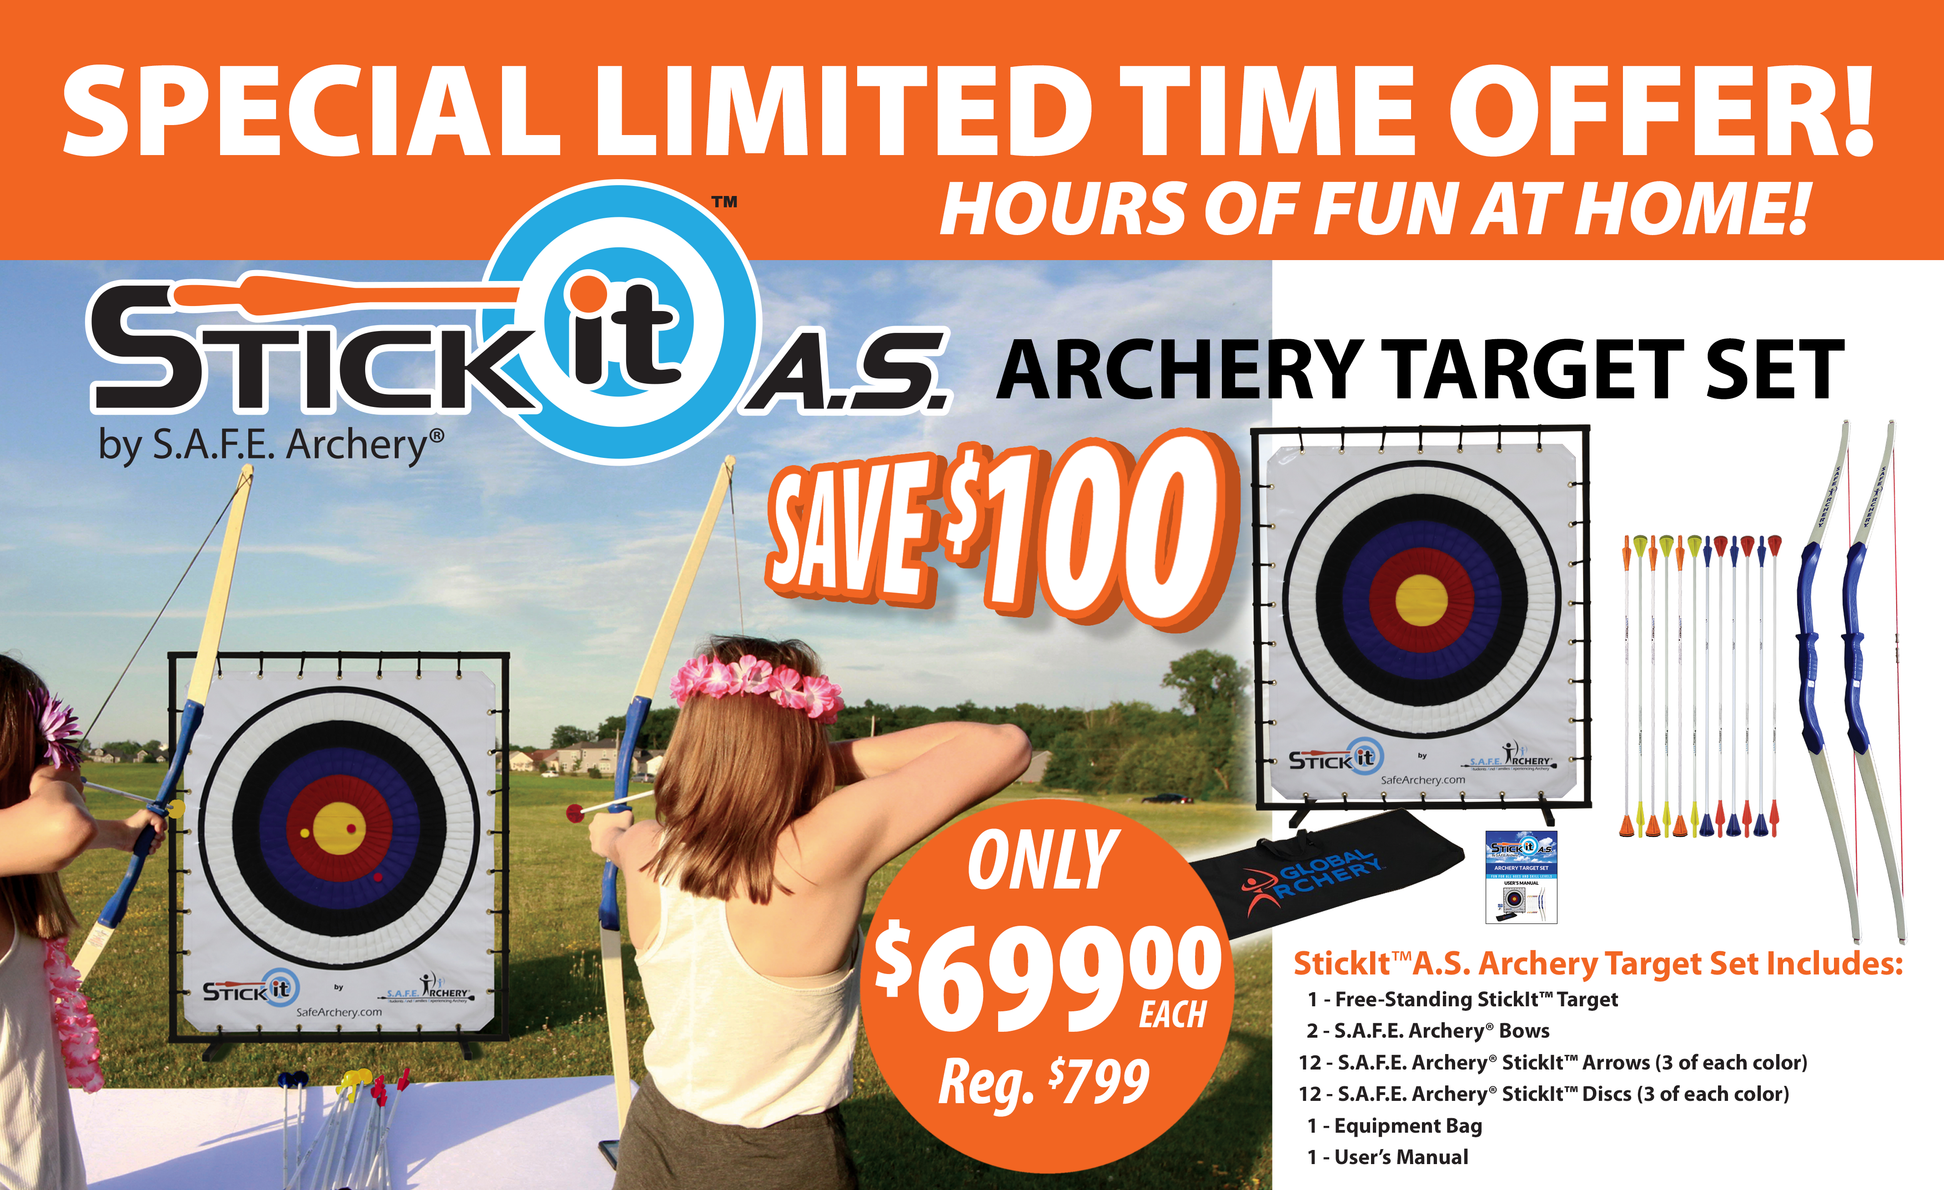 Archery Japan Extreme Archery Locations Directory Archerytag Com Extreme Archery